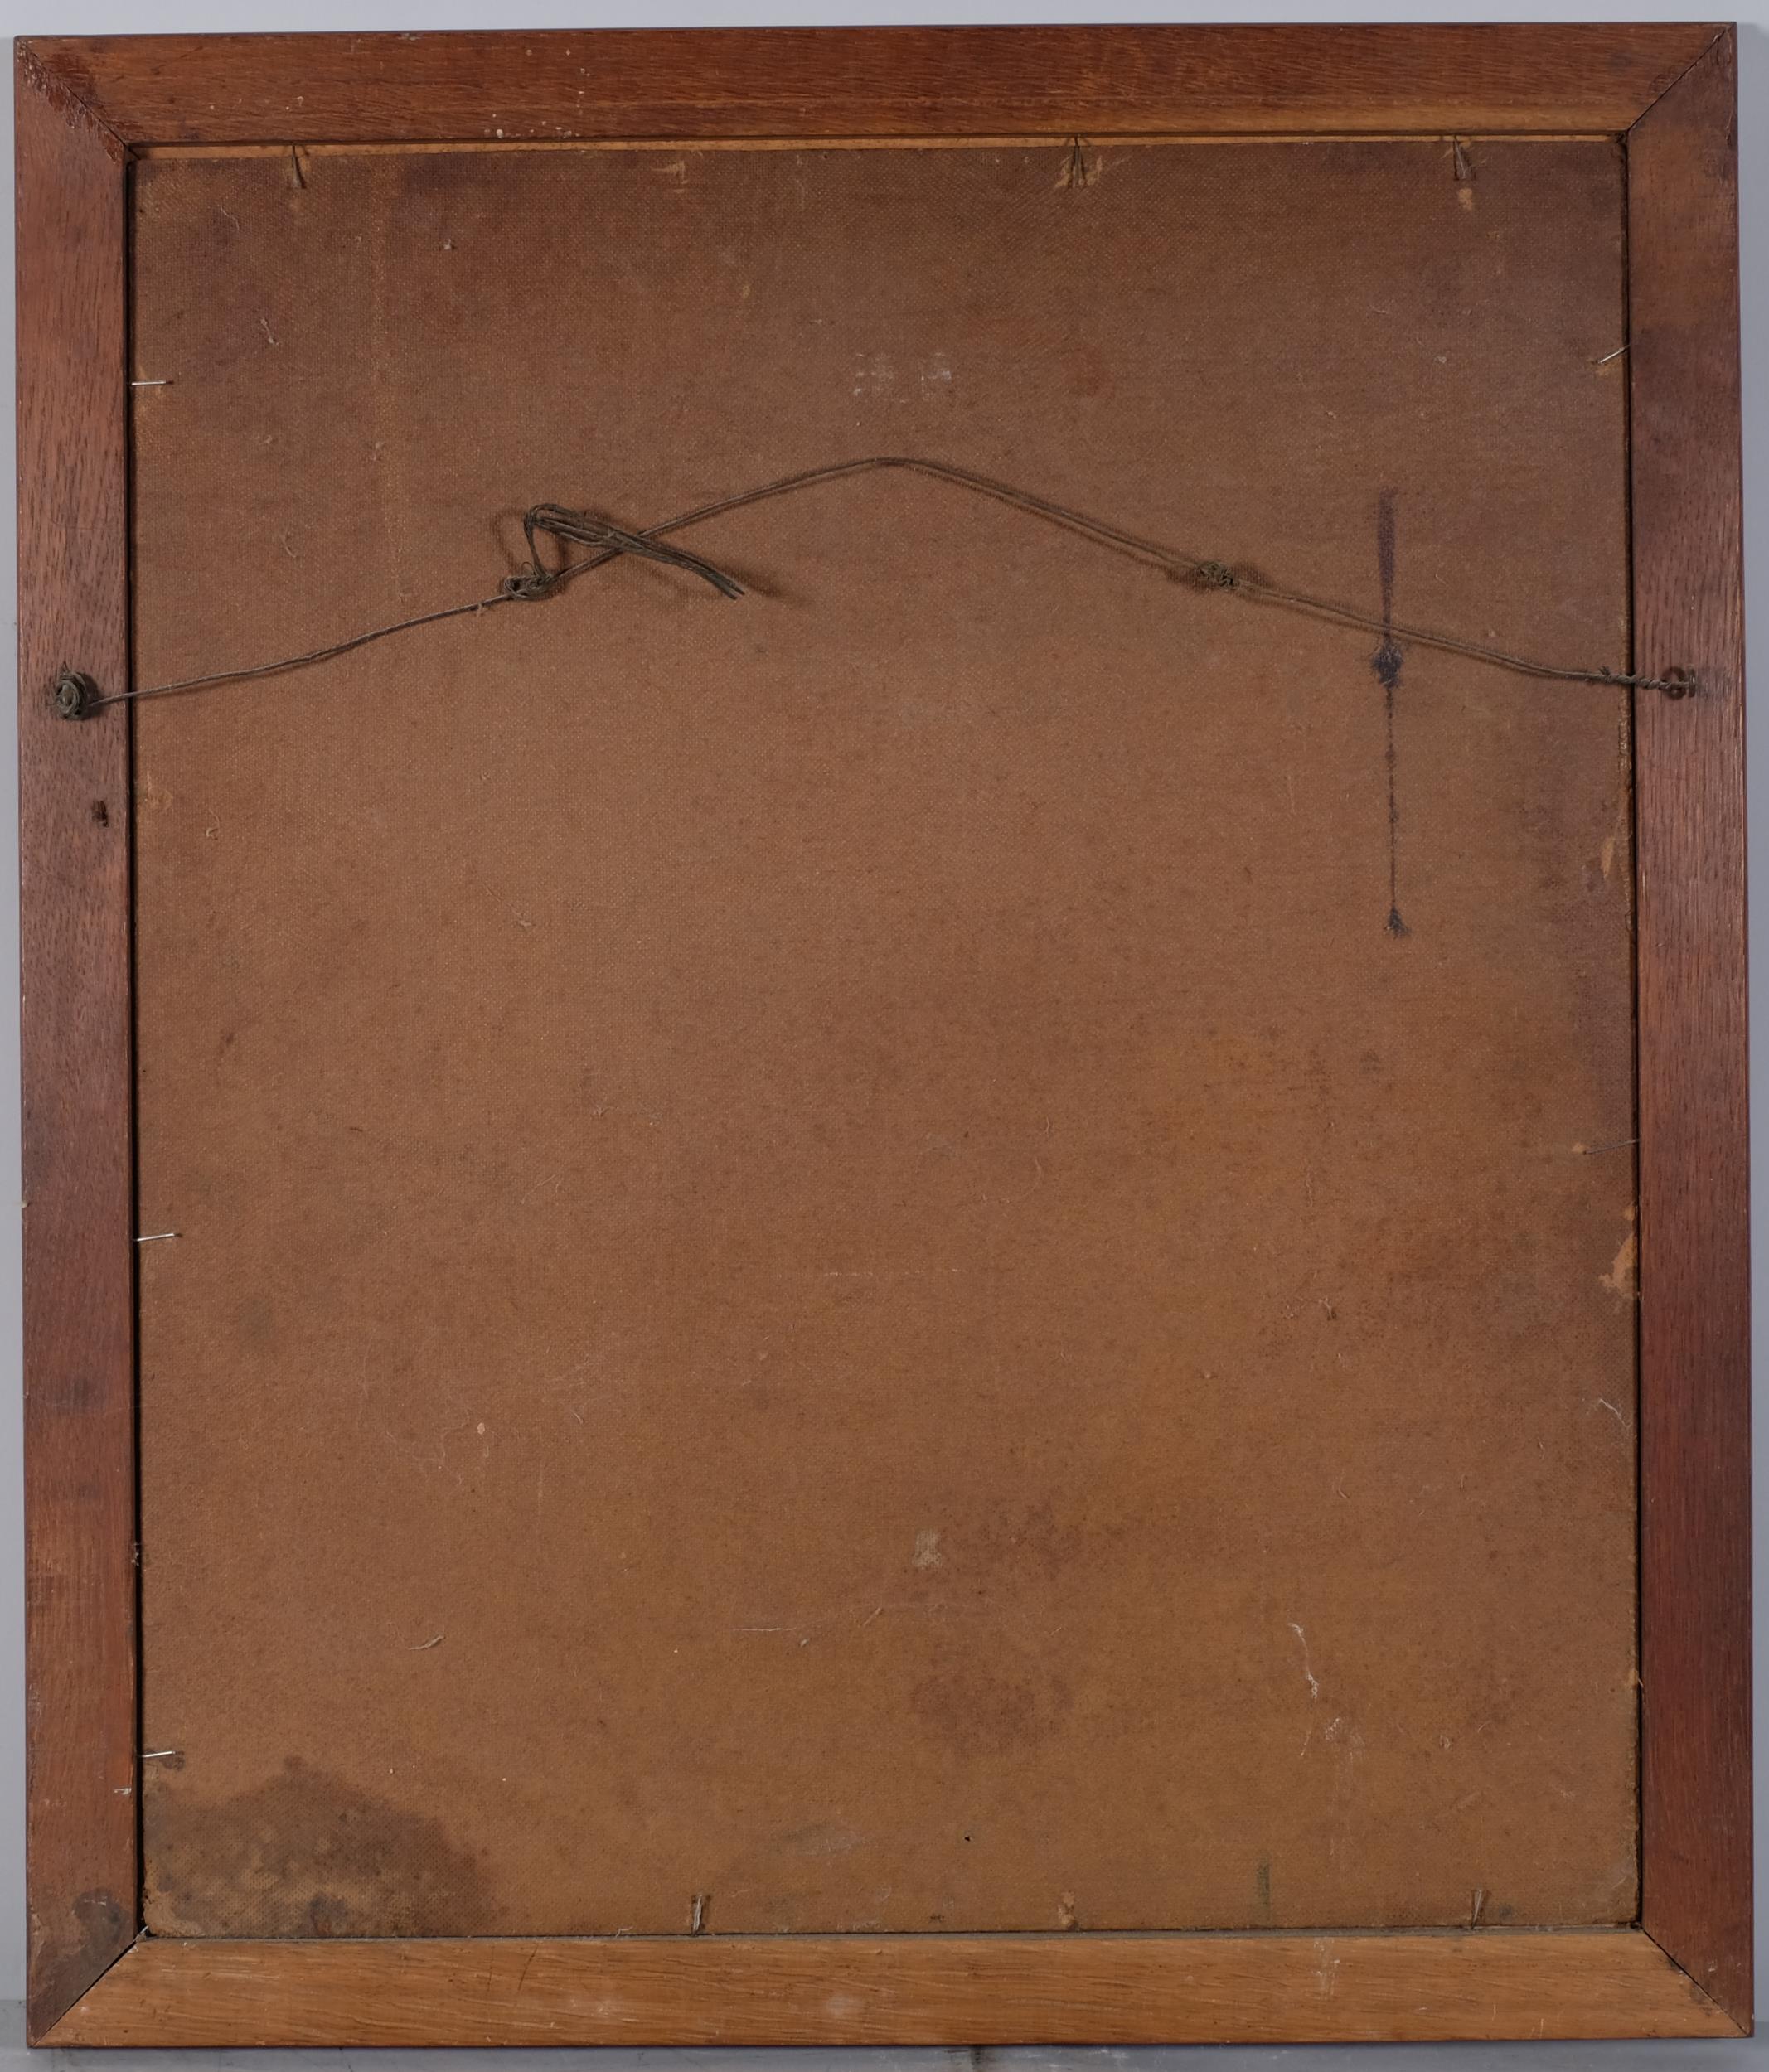 Leonard Richmond (1889 - 1965), Continental canal scene, oil on board, signed, 61cm x 51cm, framed - Image 4 of 4